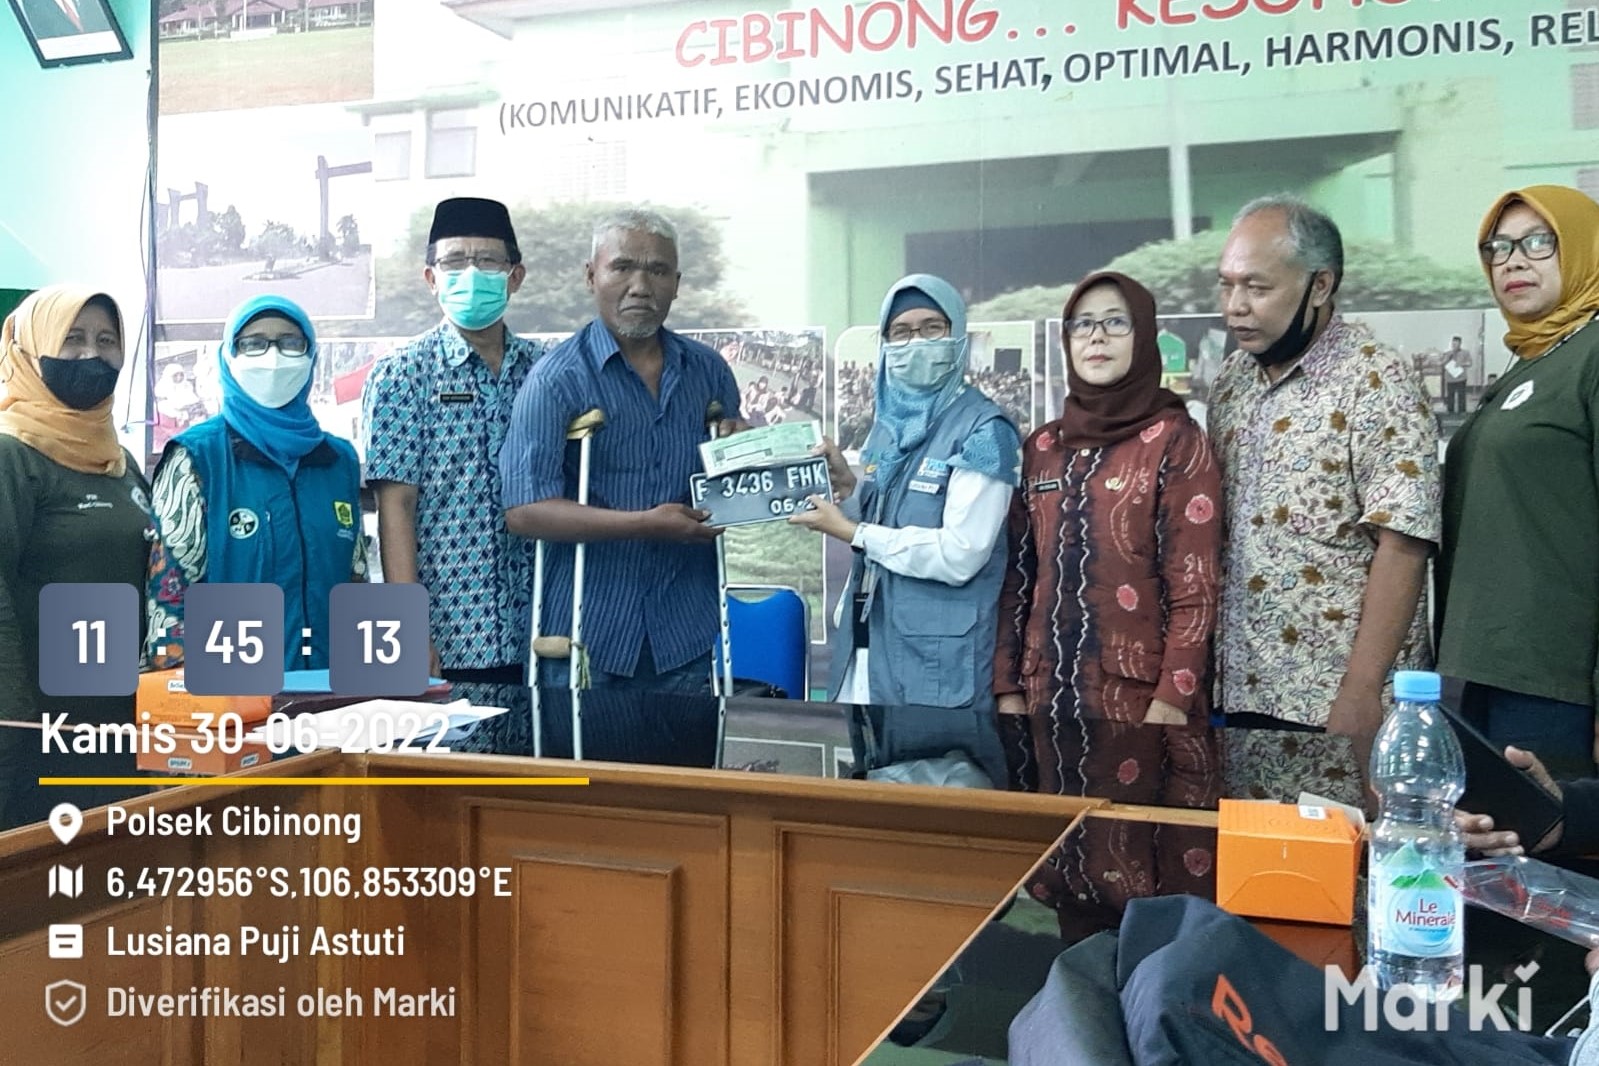 Galih Pakuan Center Hands Over Three-Wheel Commercial Motorbike Registration Certificate to Beneficiaries in Bogor Regency